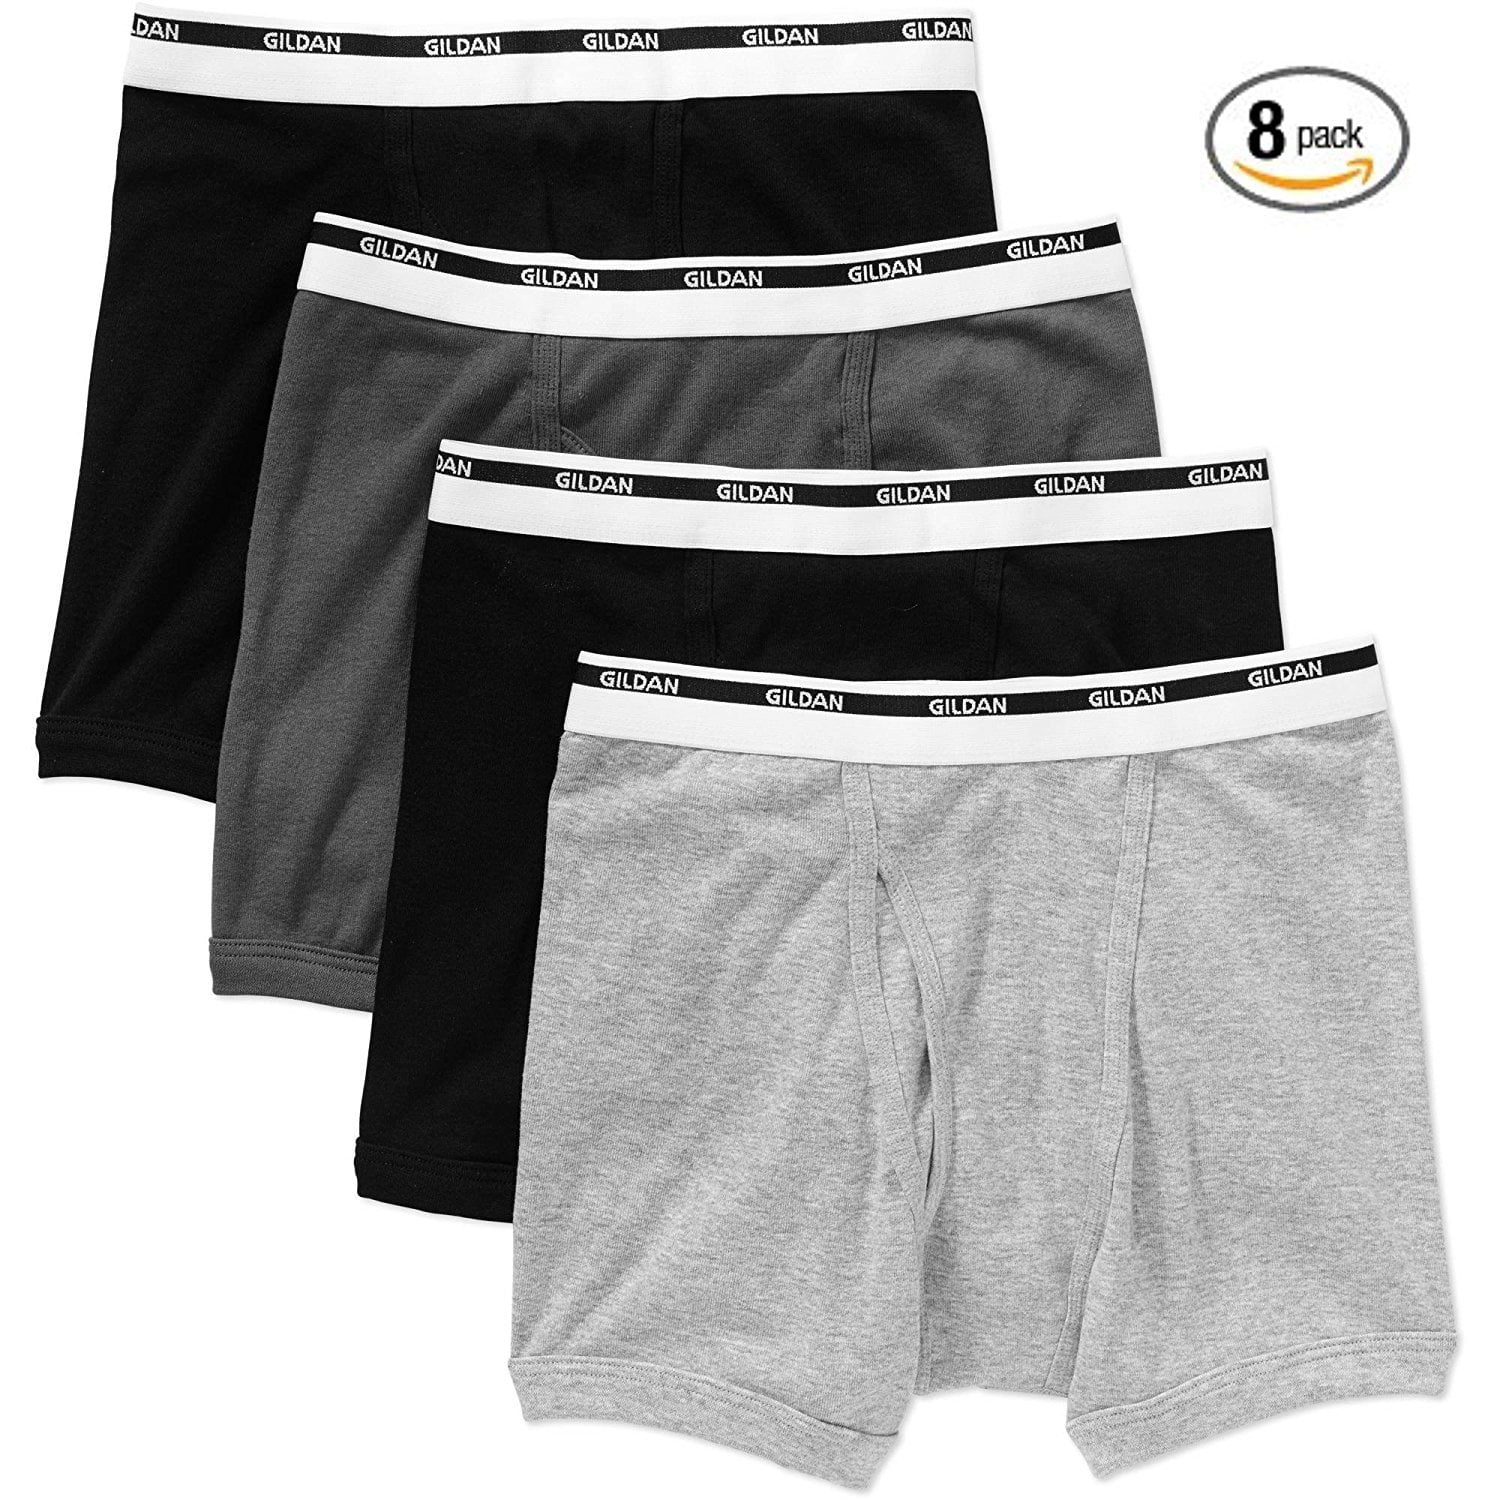 Gildan Men's Boxer Briefs Premium Cotton Underwear 8-Pack